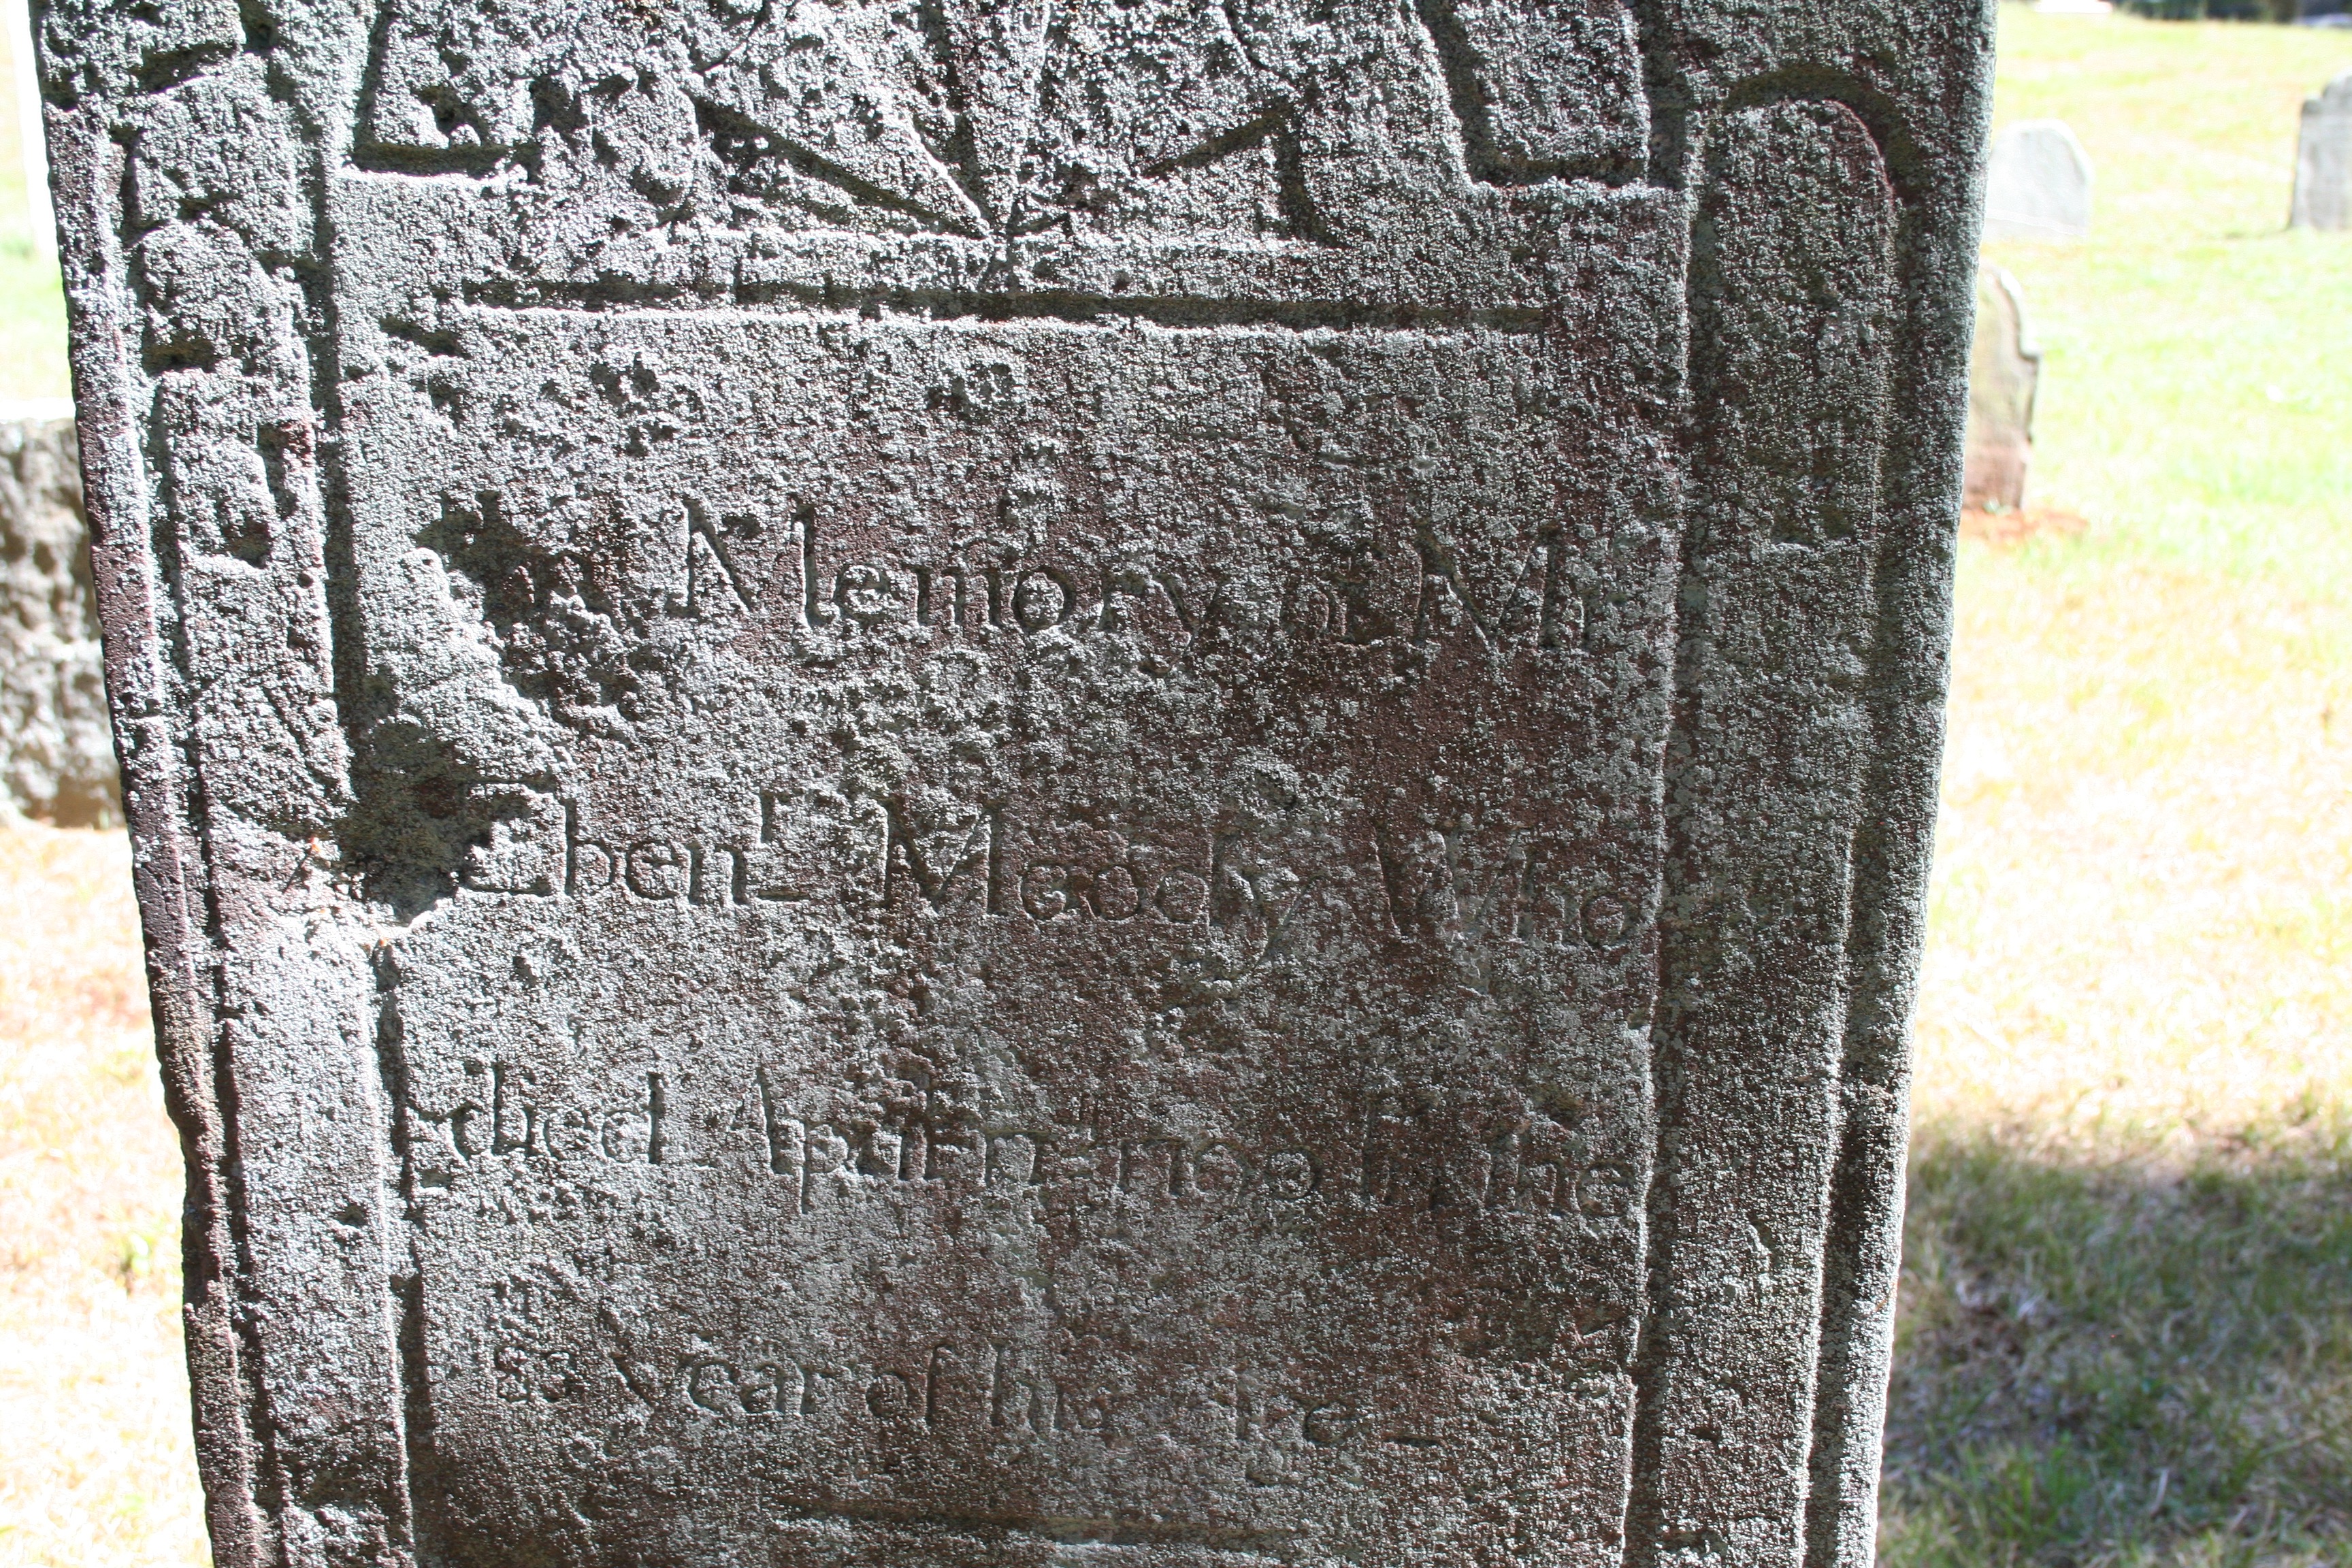 Close-up of Ebenezer Moody's inscription